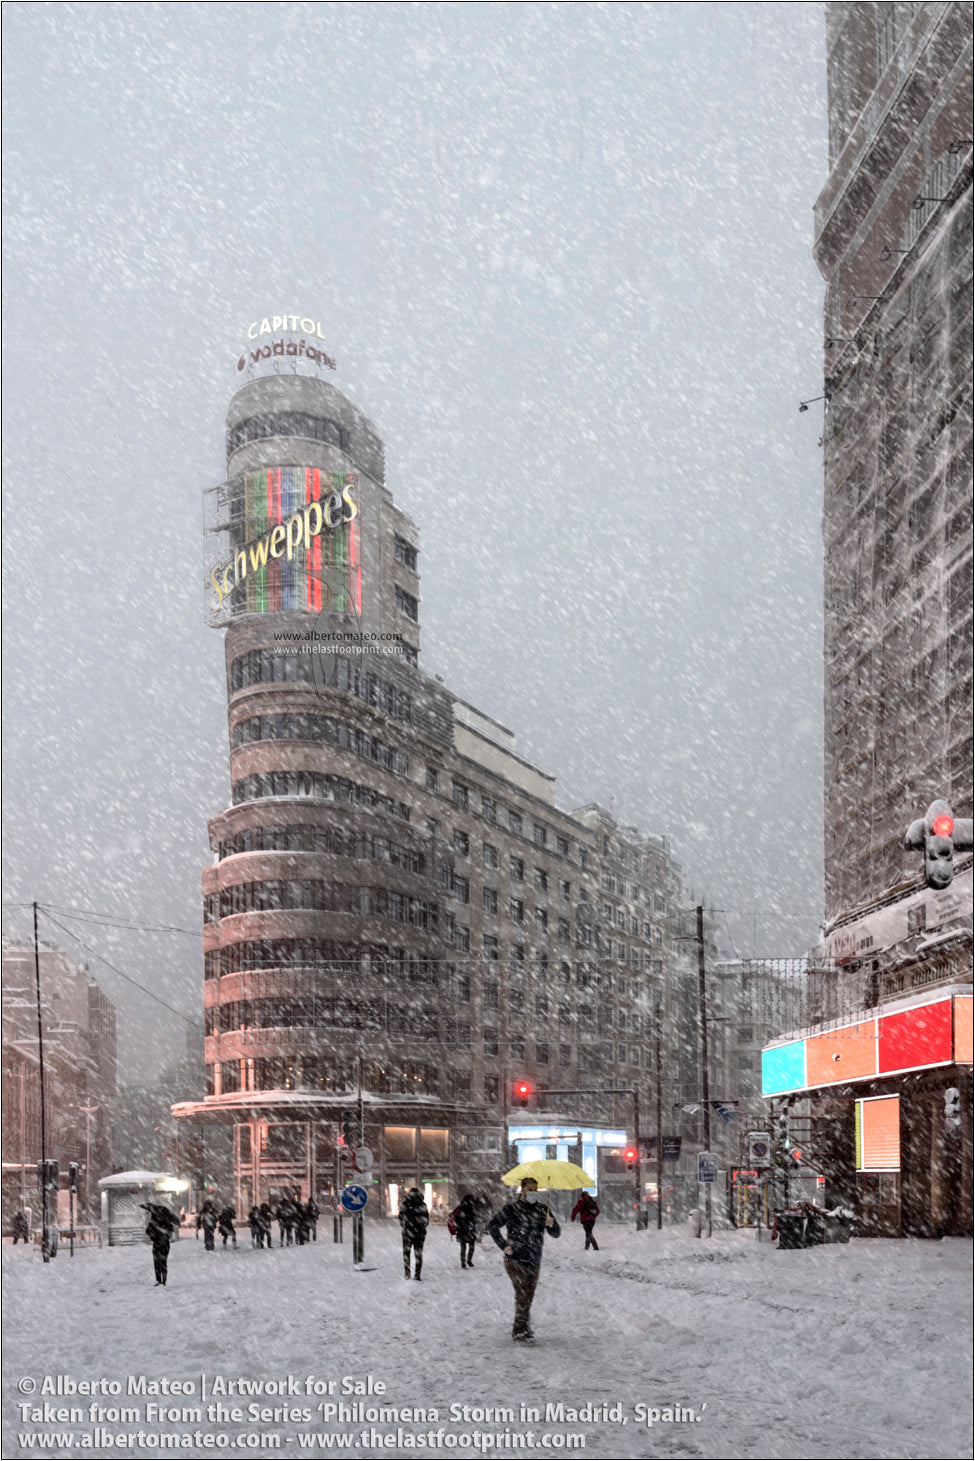 Edificio Capitol in Gran Via during Filomena Winter Snow Storm, Madrid, Spain.